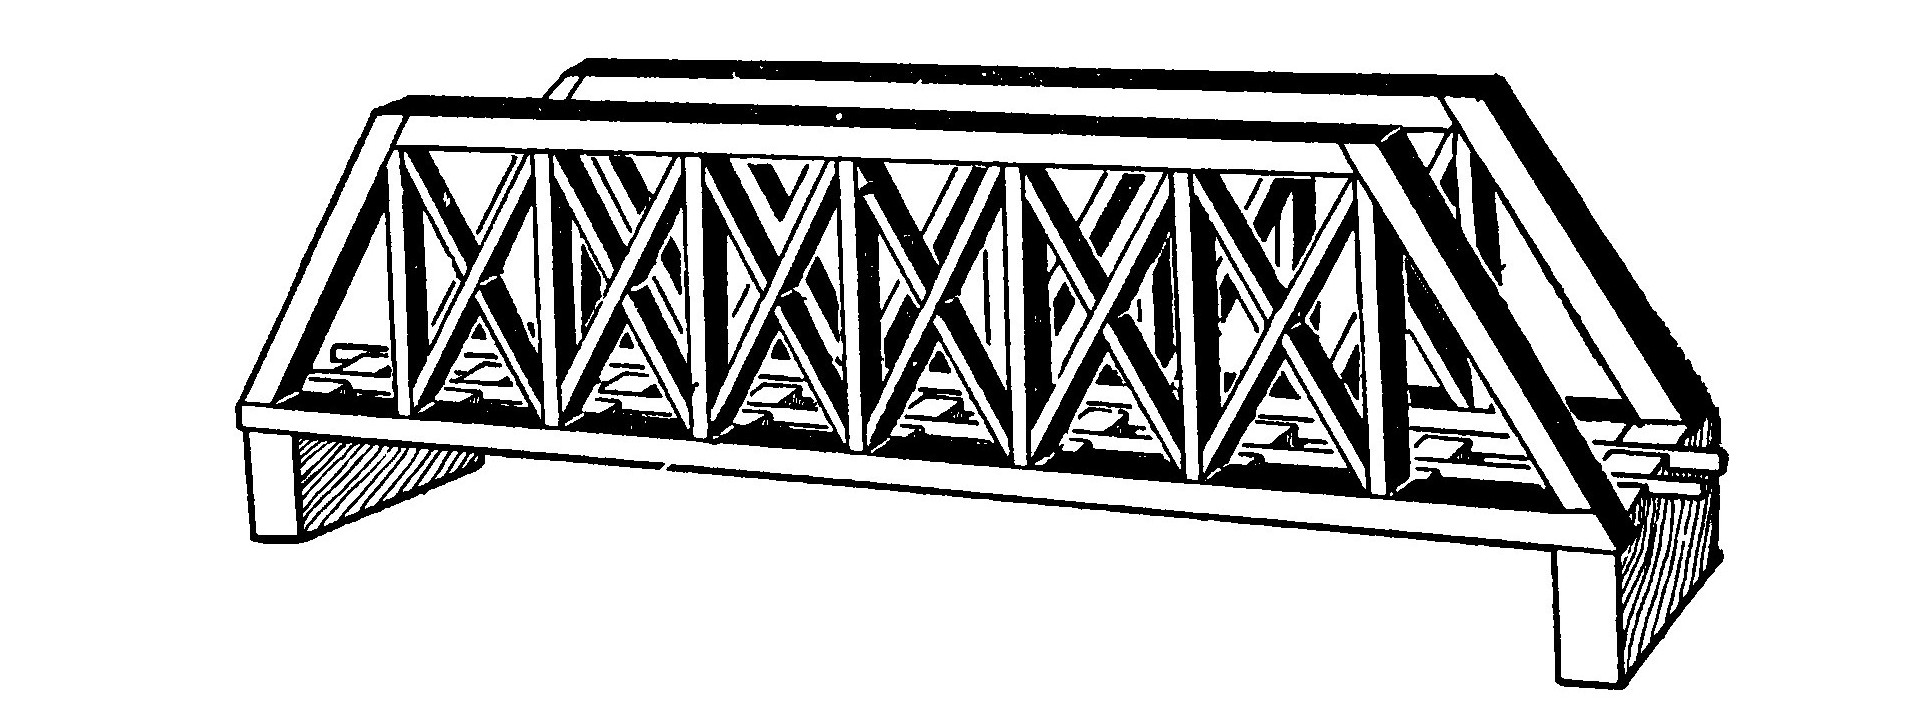 Fig. 279.—A Design for a Railway Bridge.